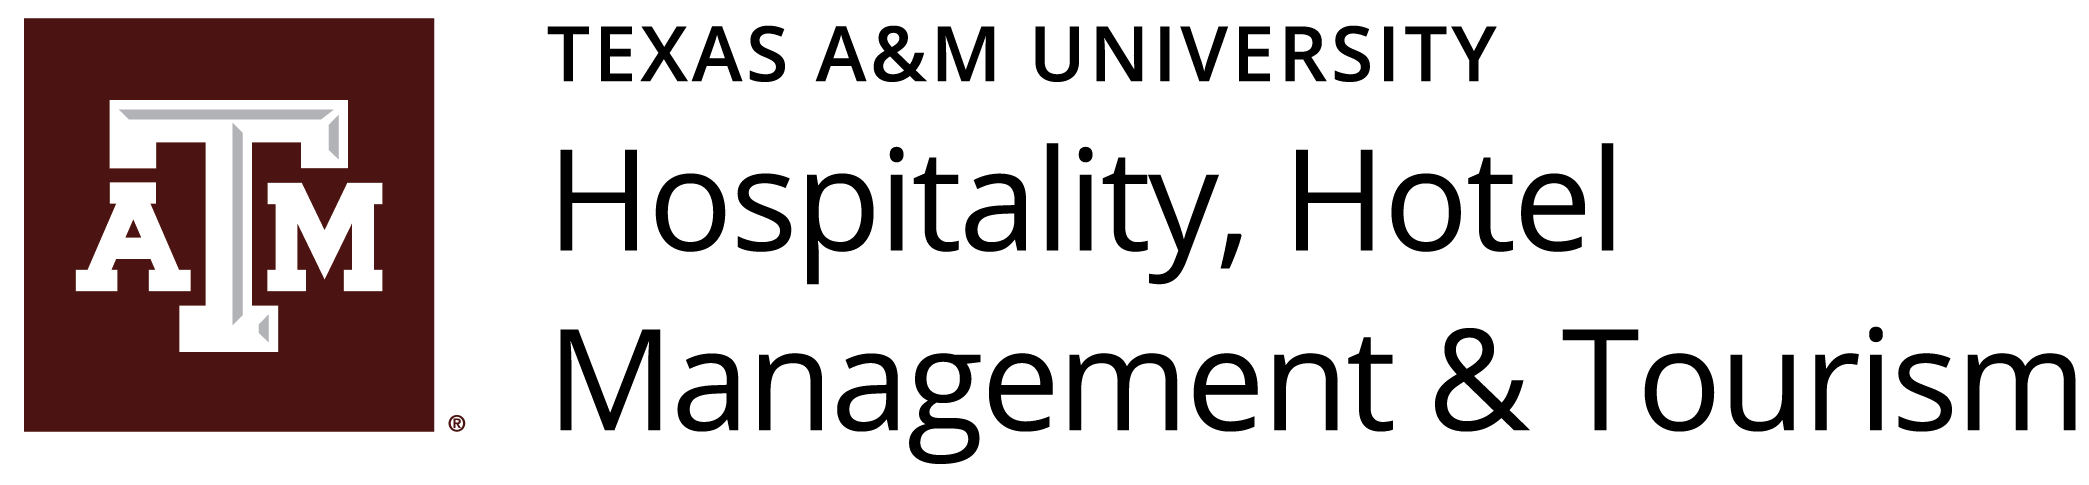 iowa state university phd hospitality management